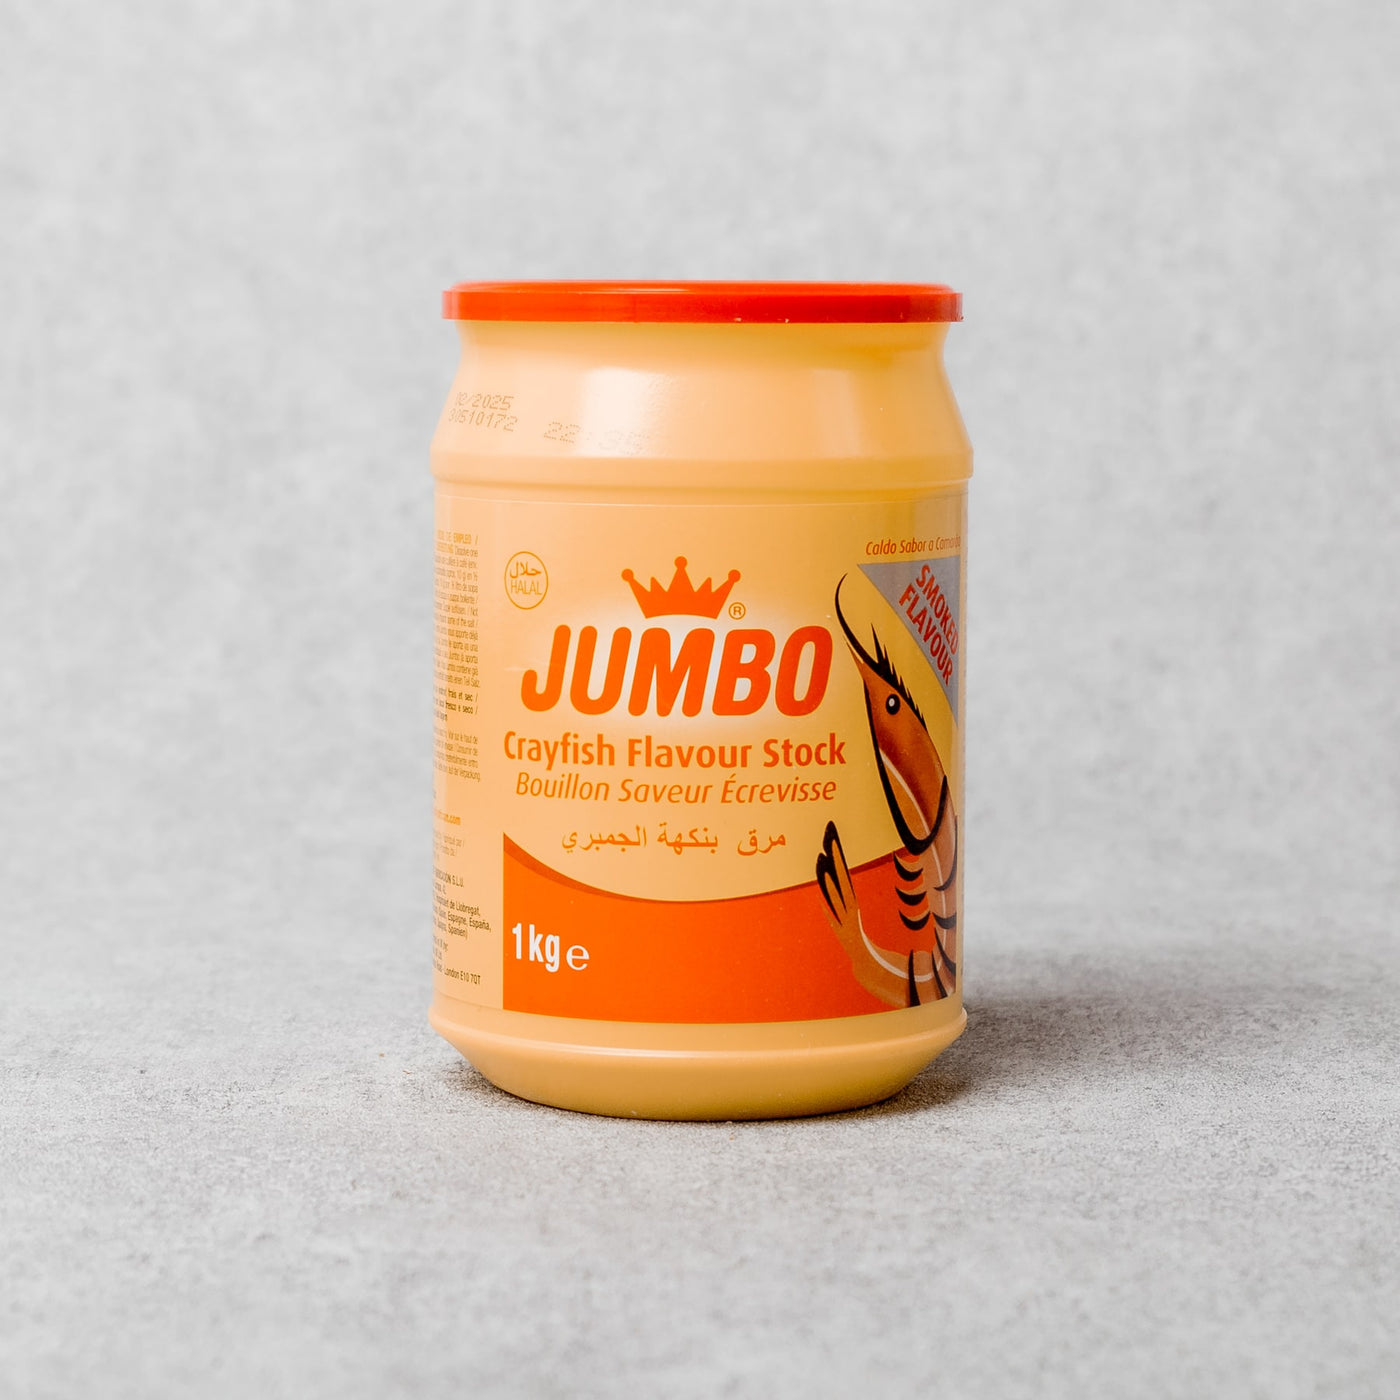 Jumbo - Crayfish Flavour